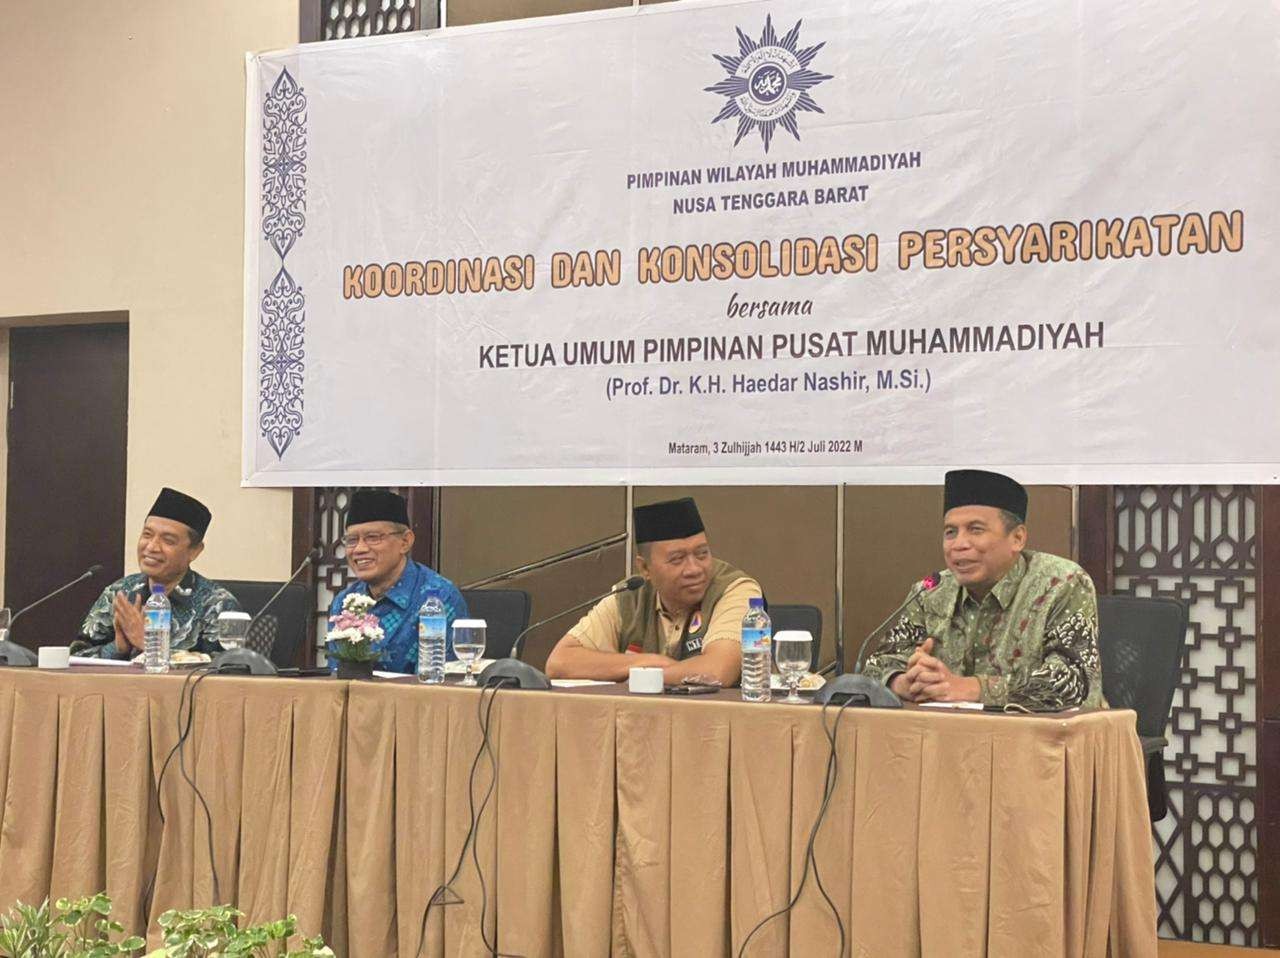 Haedar Nashir dalam forum Koordinasi dan Konsolidasi Persyarikatan Pimpinan Wilayah Muhammadiyah (PWM) Nusa Tenggara Barat, Sabtu 2 Juli 2022. (Foto: Istimewa)